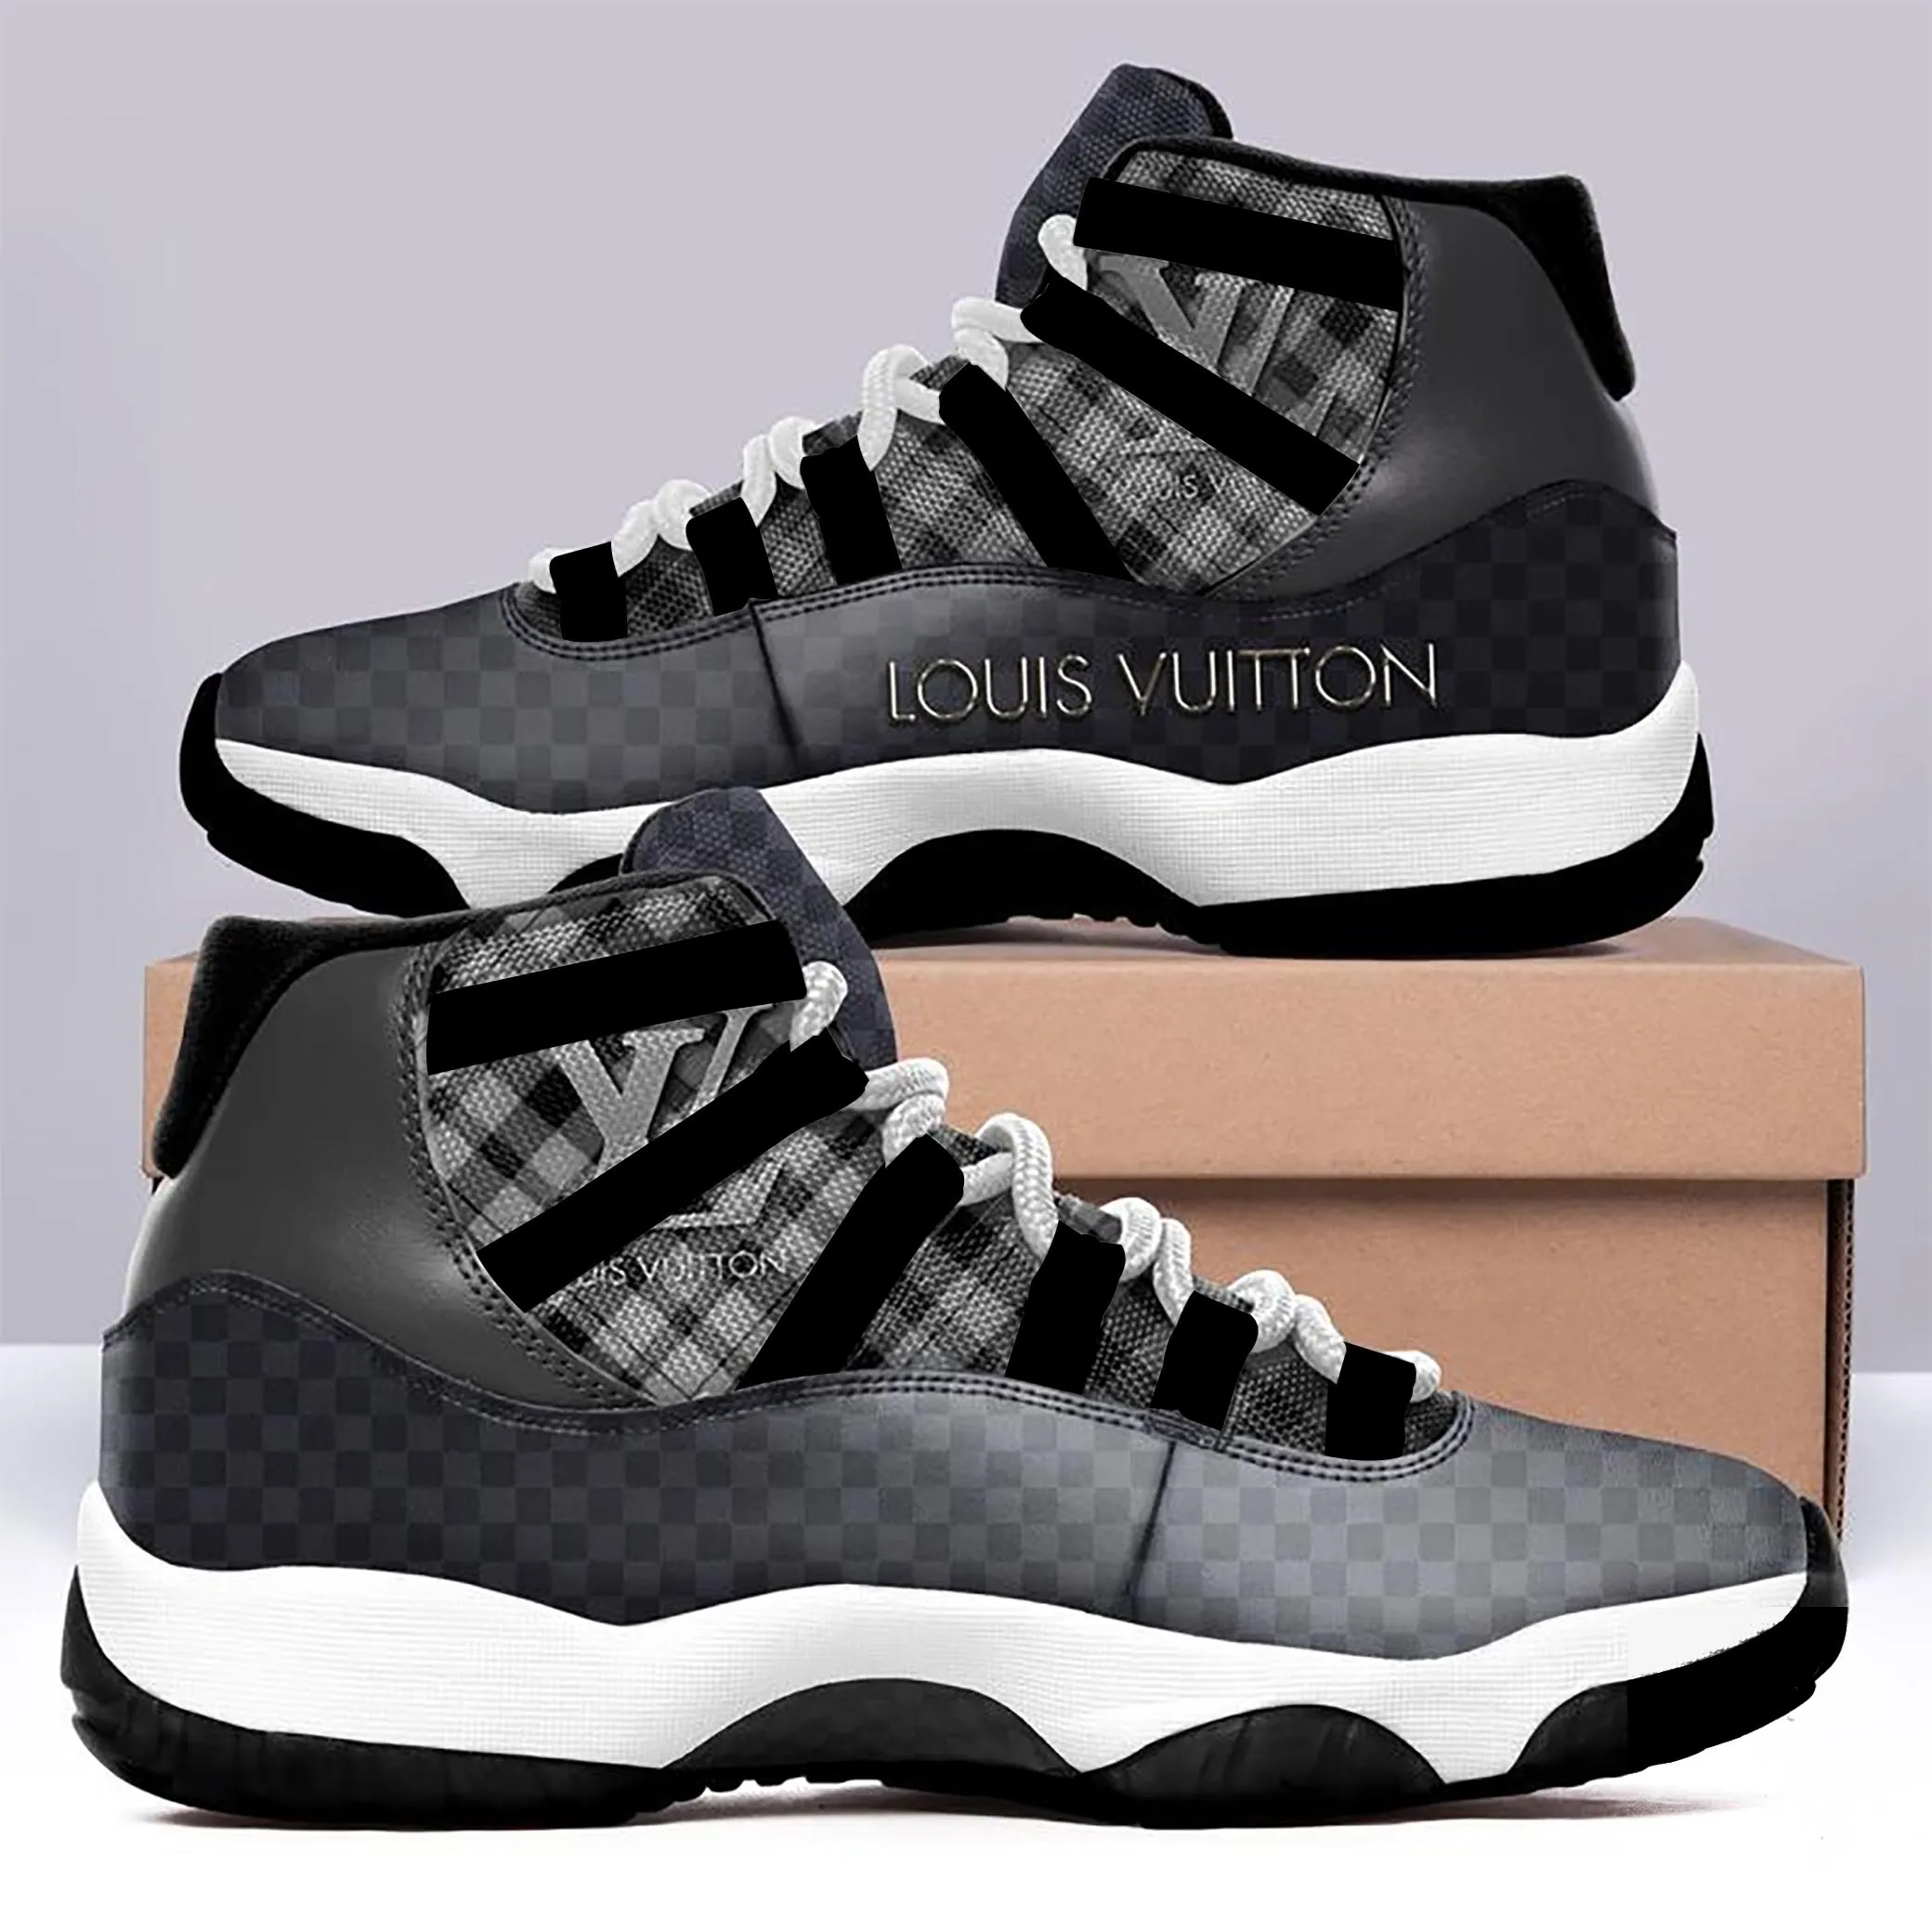 Black Grey Louis Vuitton Air Jordan 11 Sneakers Luxury Fashion Sport Shoes